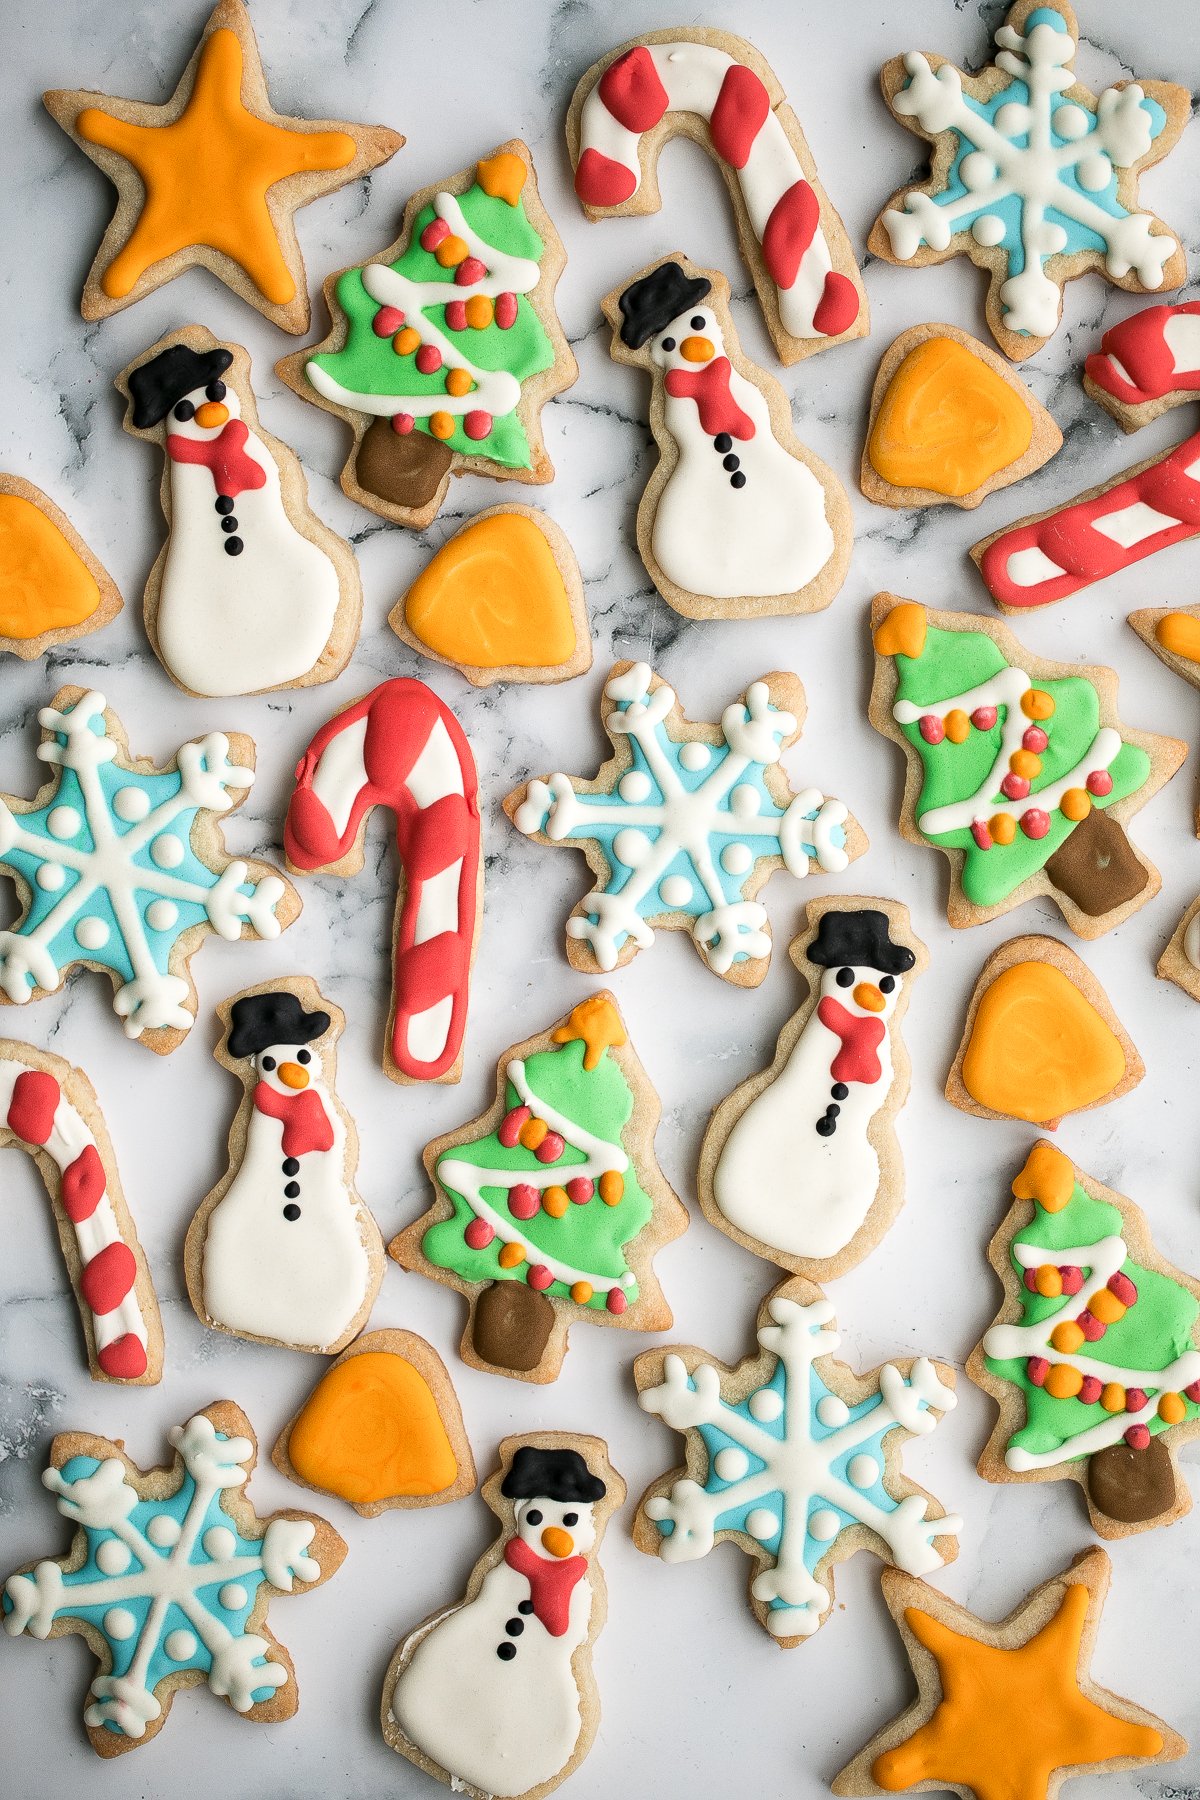 Christmas Sugar Cookie Cups - THIS IS NOT DIET FOOD